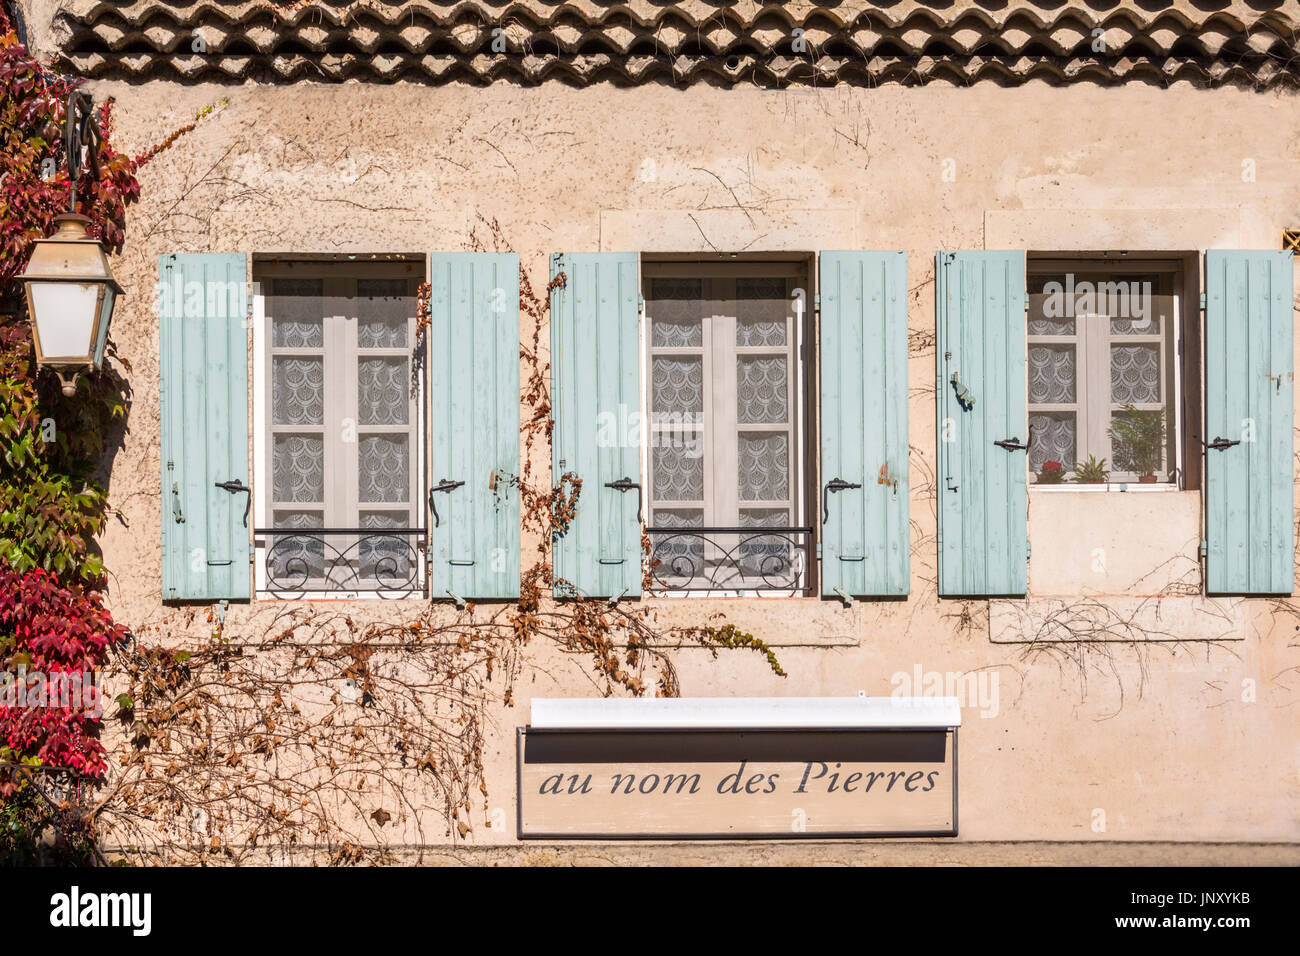 Lourmarin, Luberon, Provence, France - le 9 octobre 2015 : Façade de boutique à Lourmarin, Luberon, France. Banque D'Images